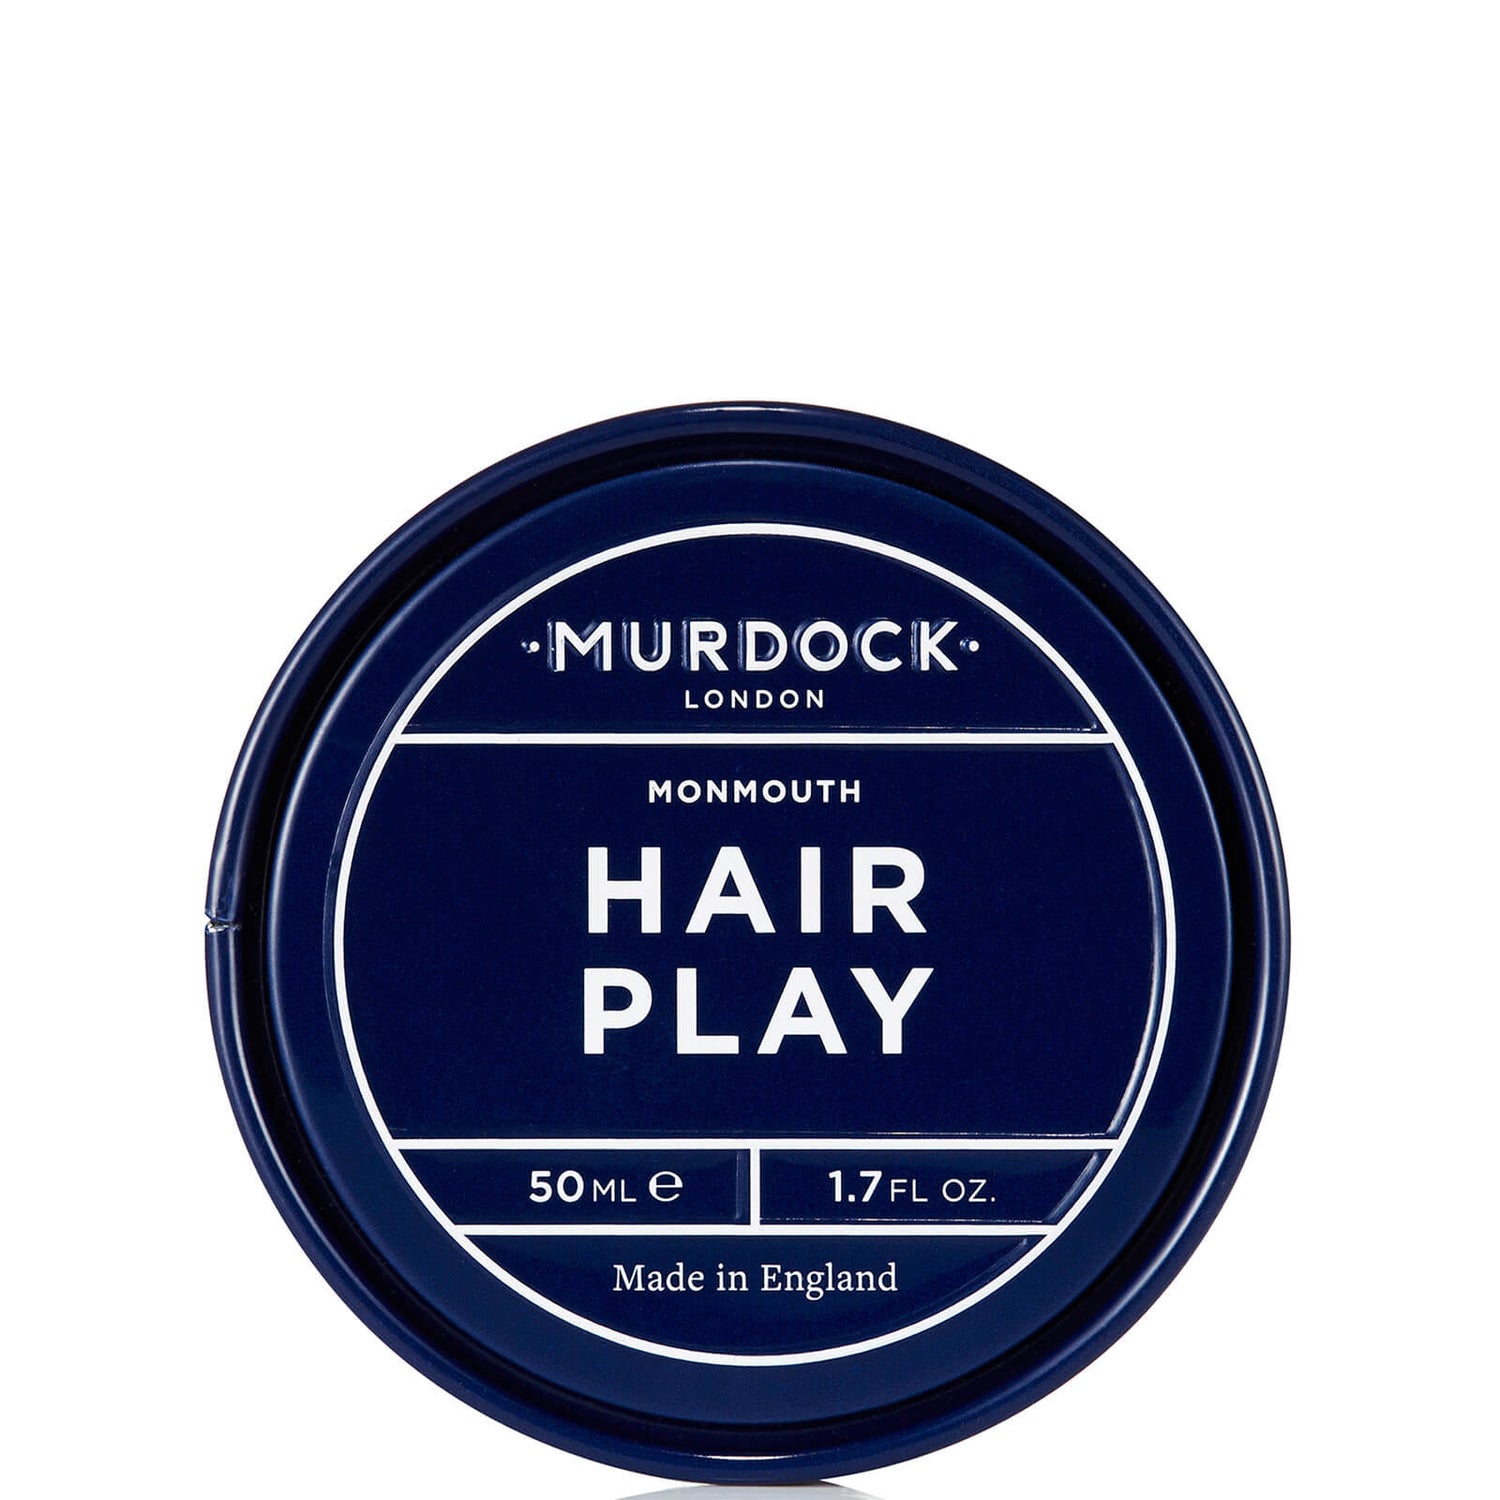 Pomada para Cabelo Hair Play da Murdock London 50 ml